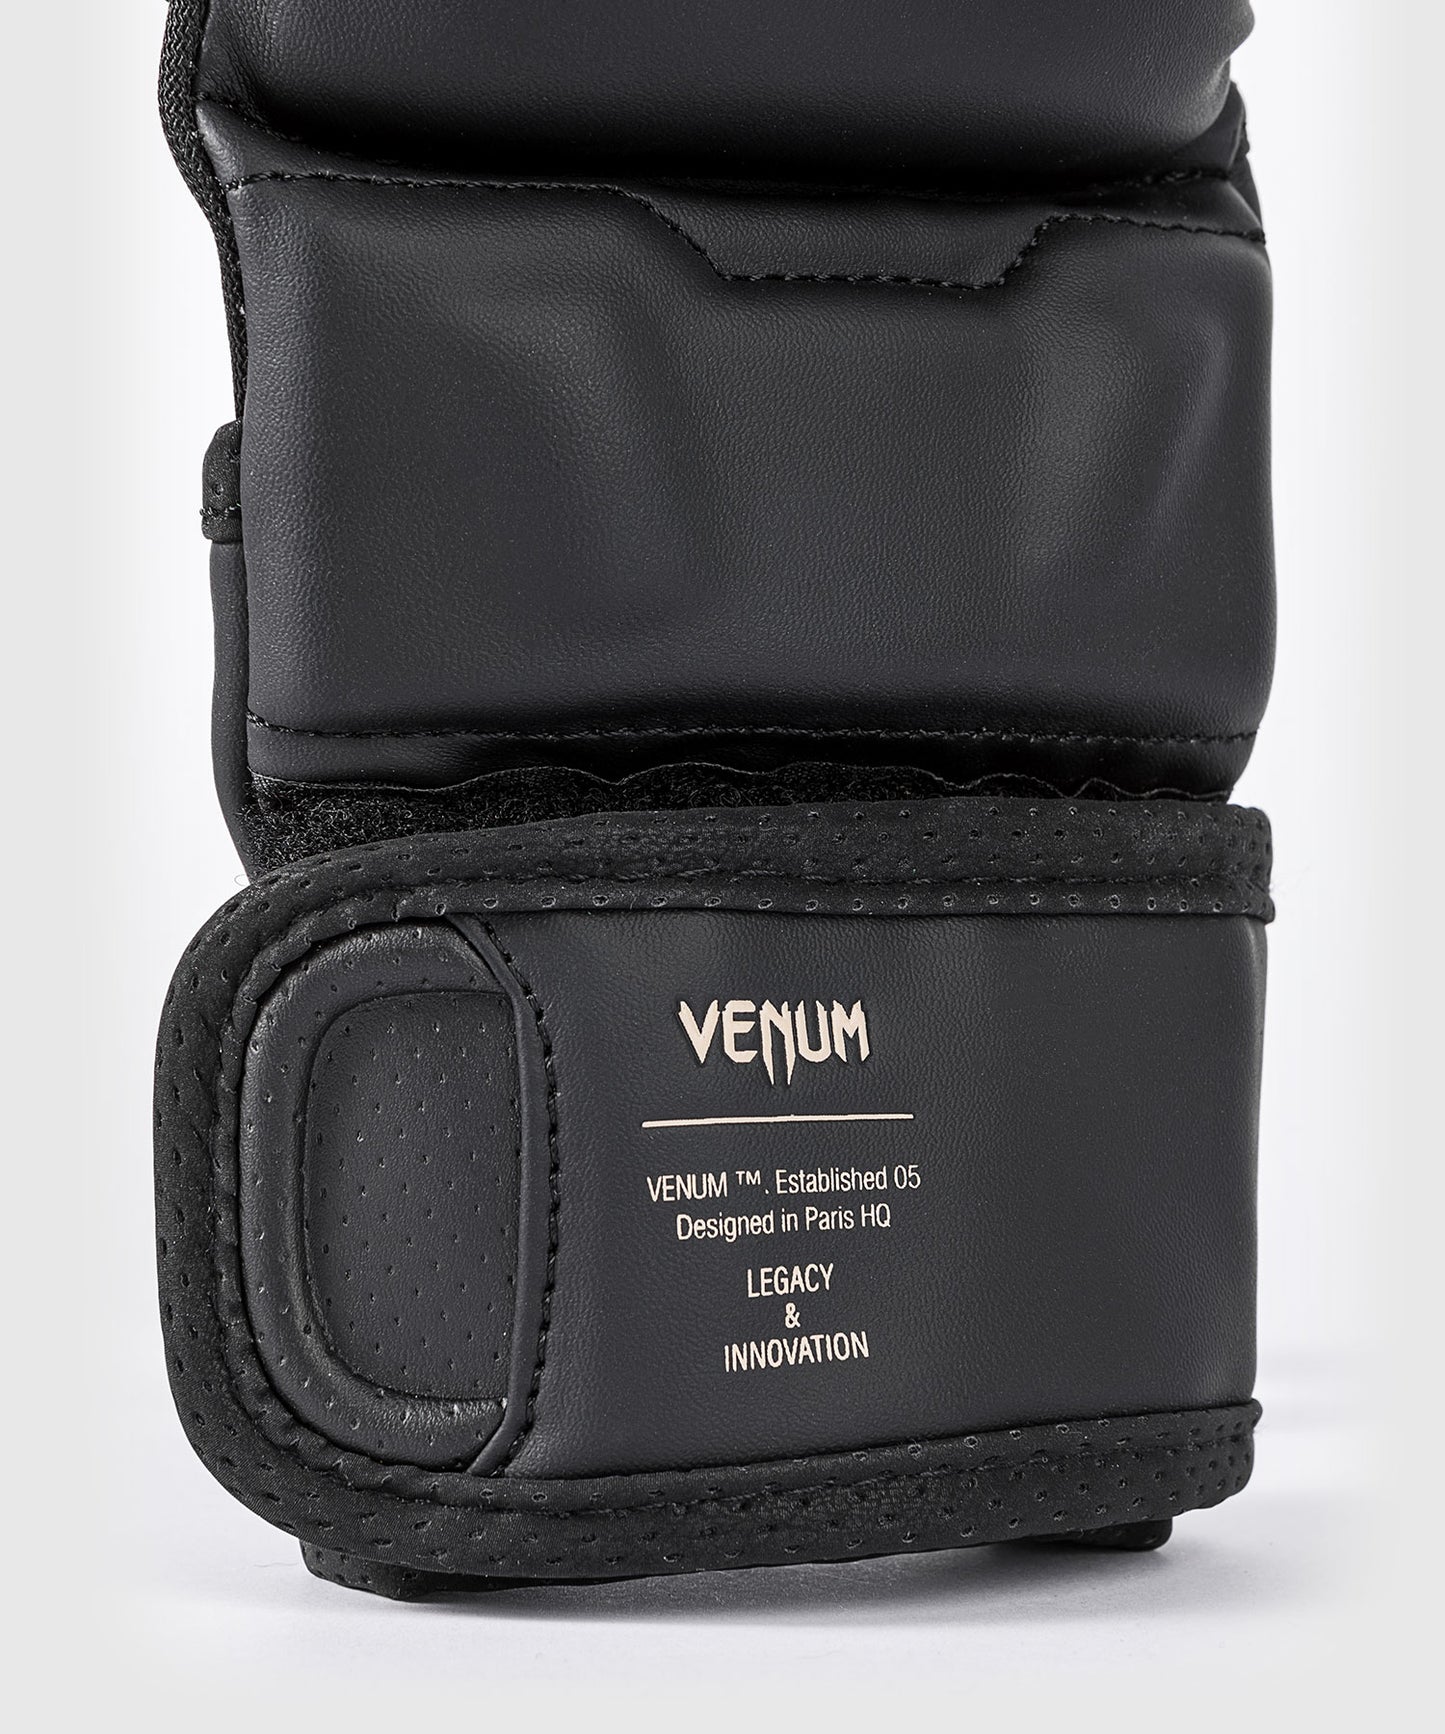 Venum Impact Evo Sparring MMA Gloves - Black